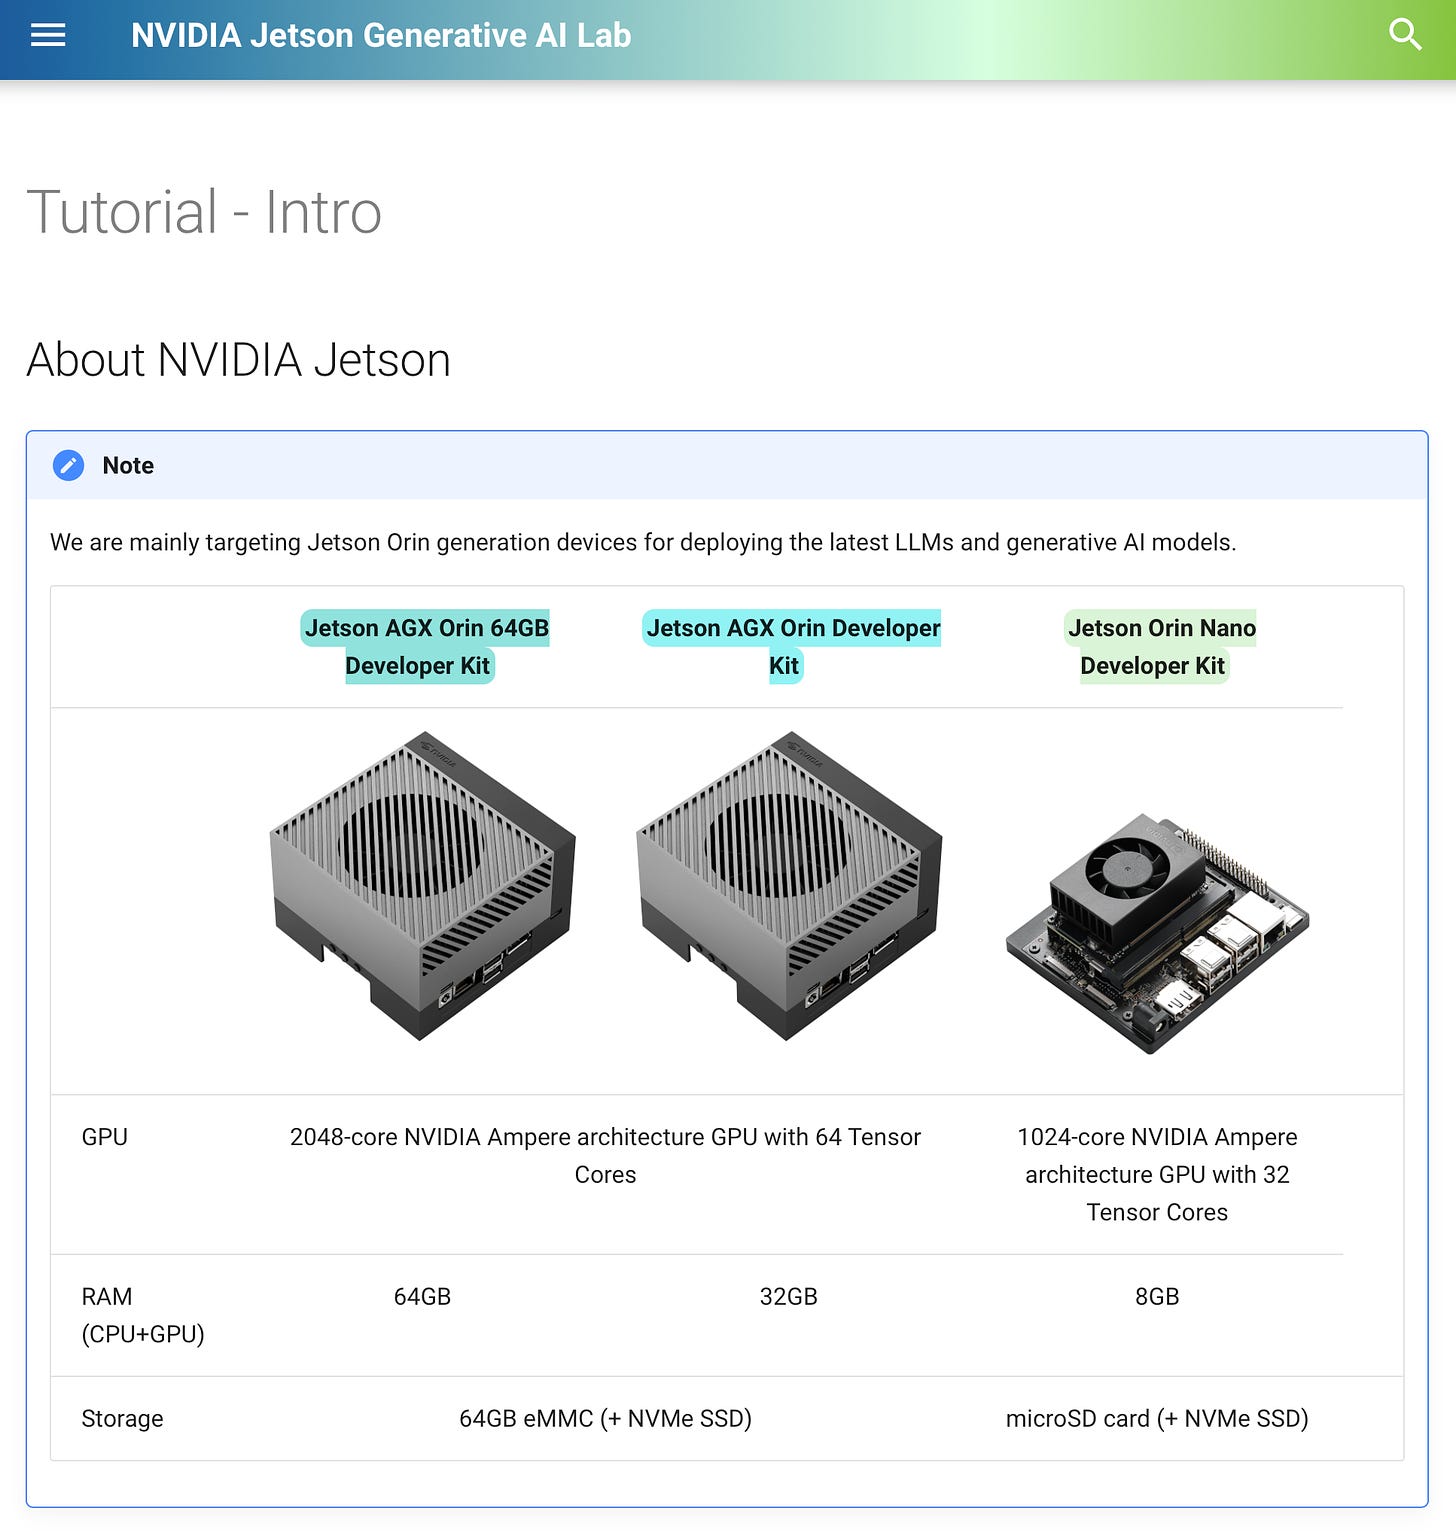 NVIDIA Jetson Generative AI Lab > Jetson Orin generation devices